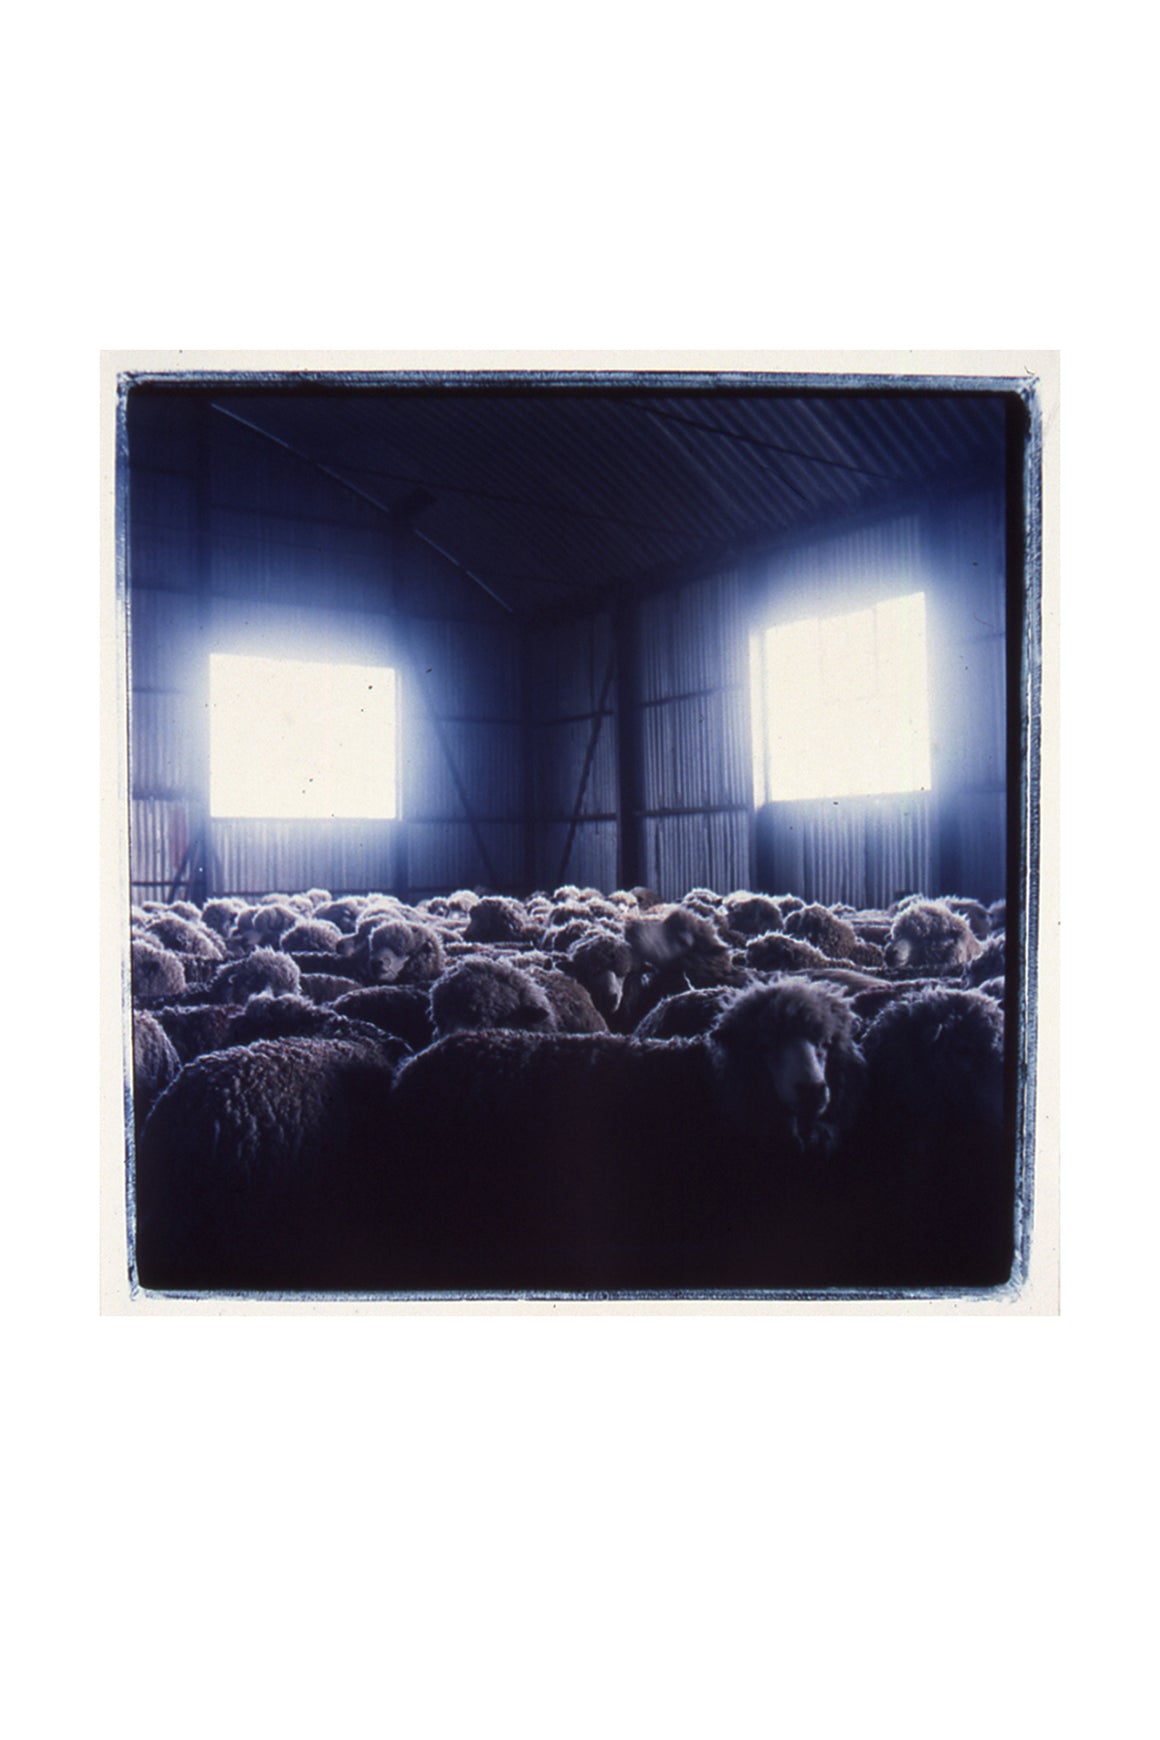 Michael Stuetz Untitled Photograph (Sheep)